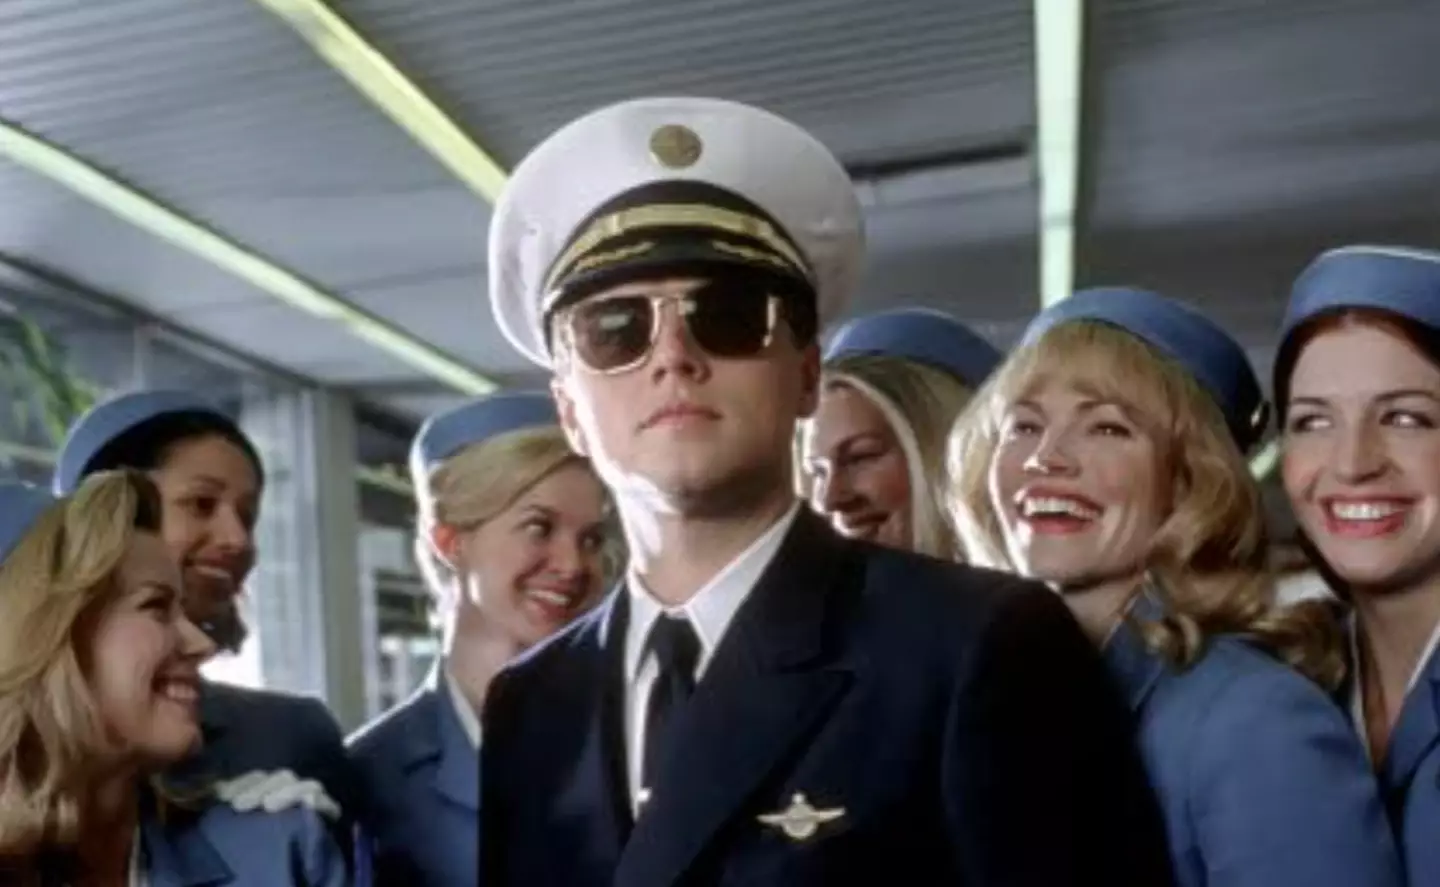 Leonardo DiCaprio portrayed the conman in the film.